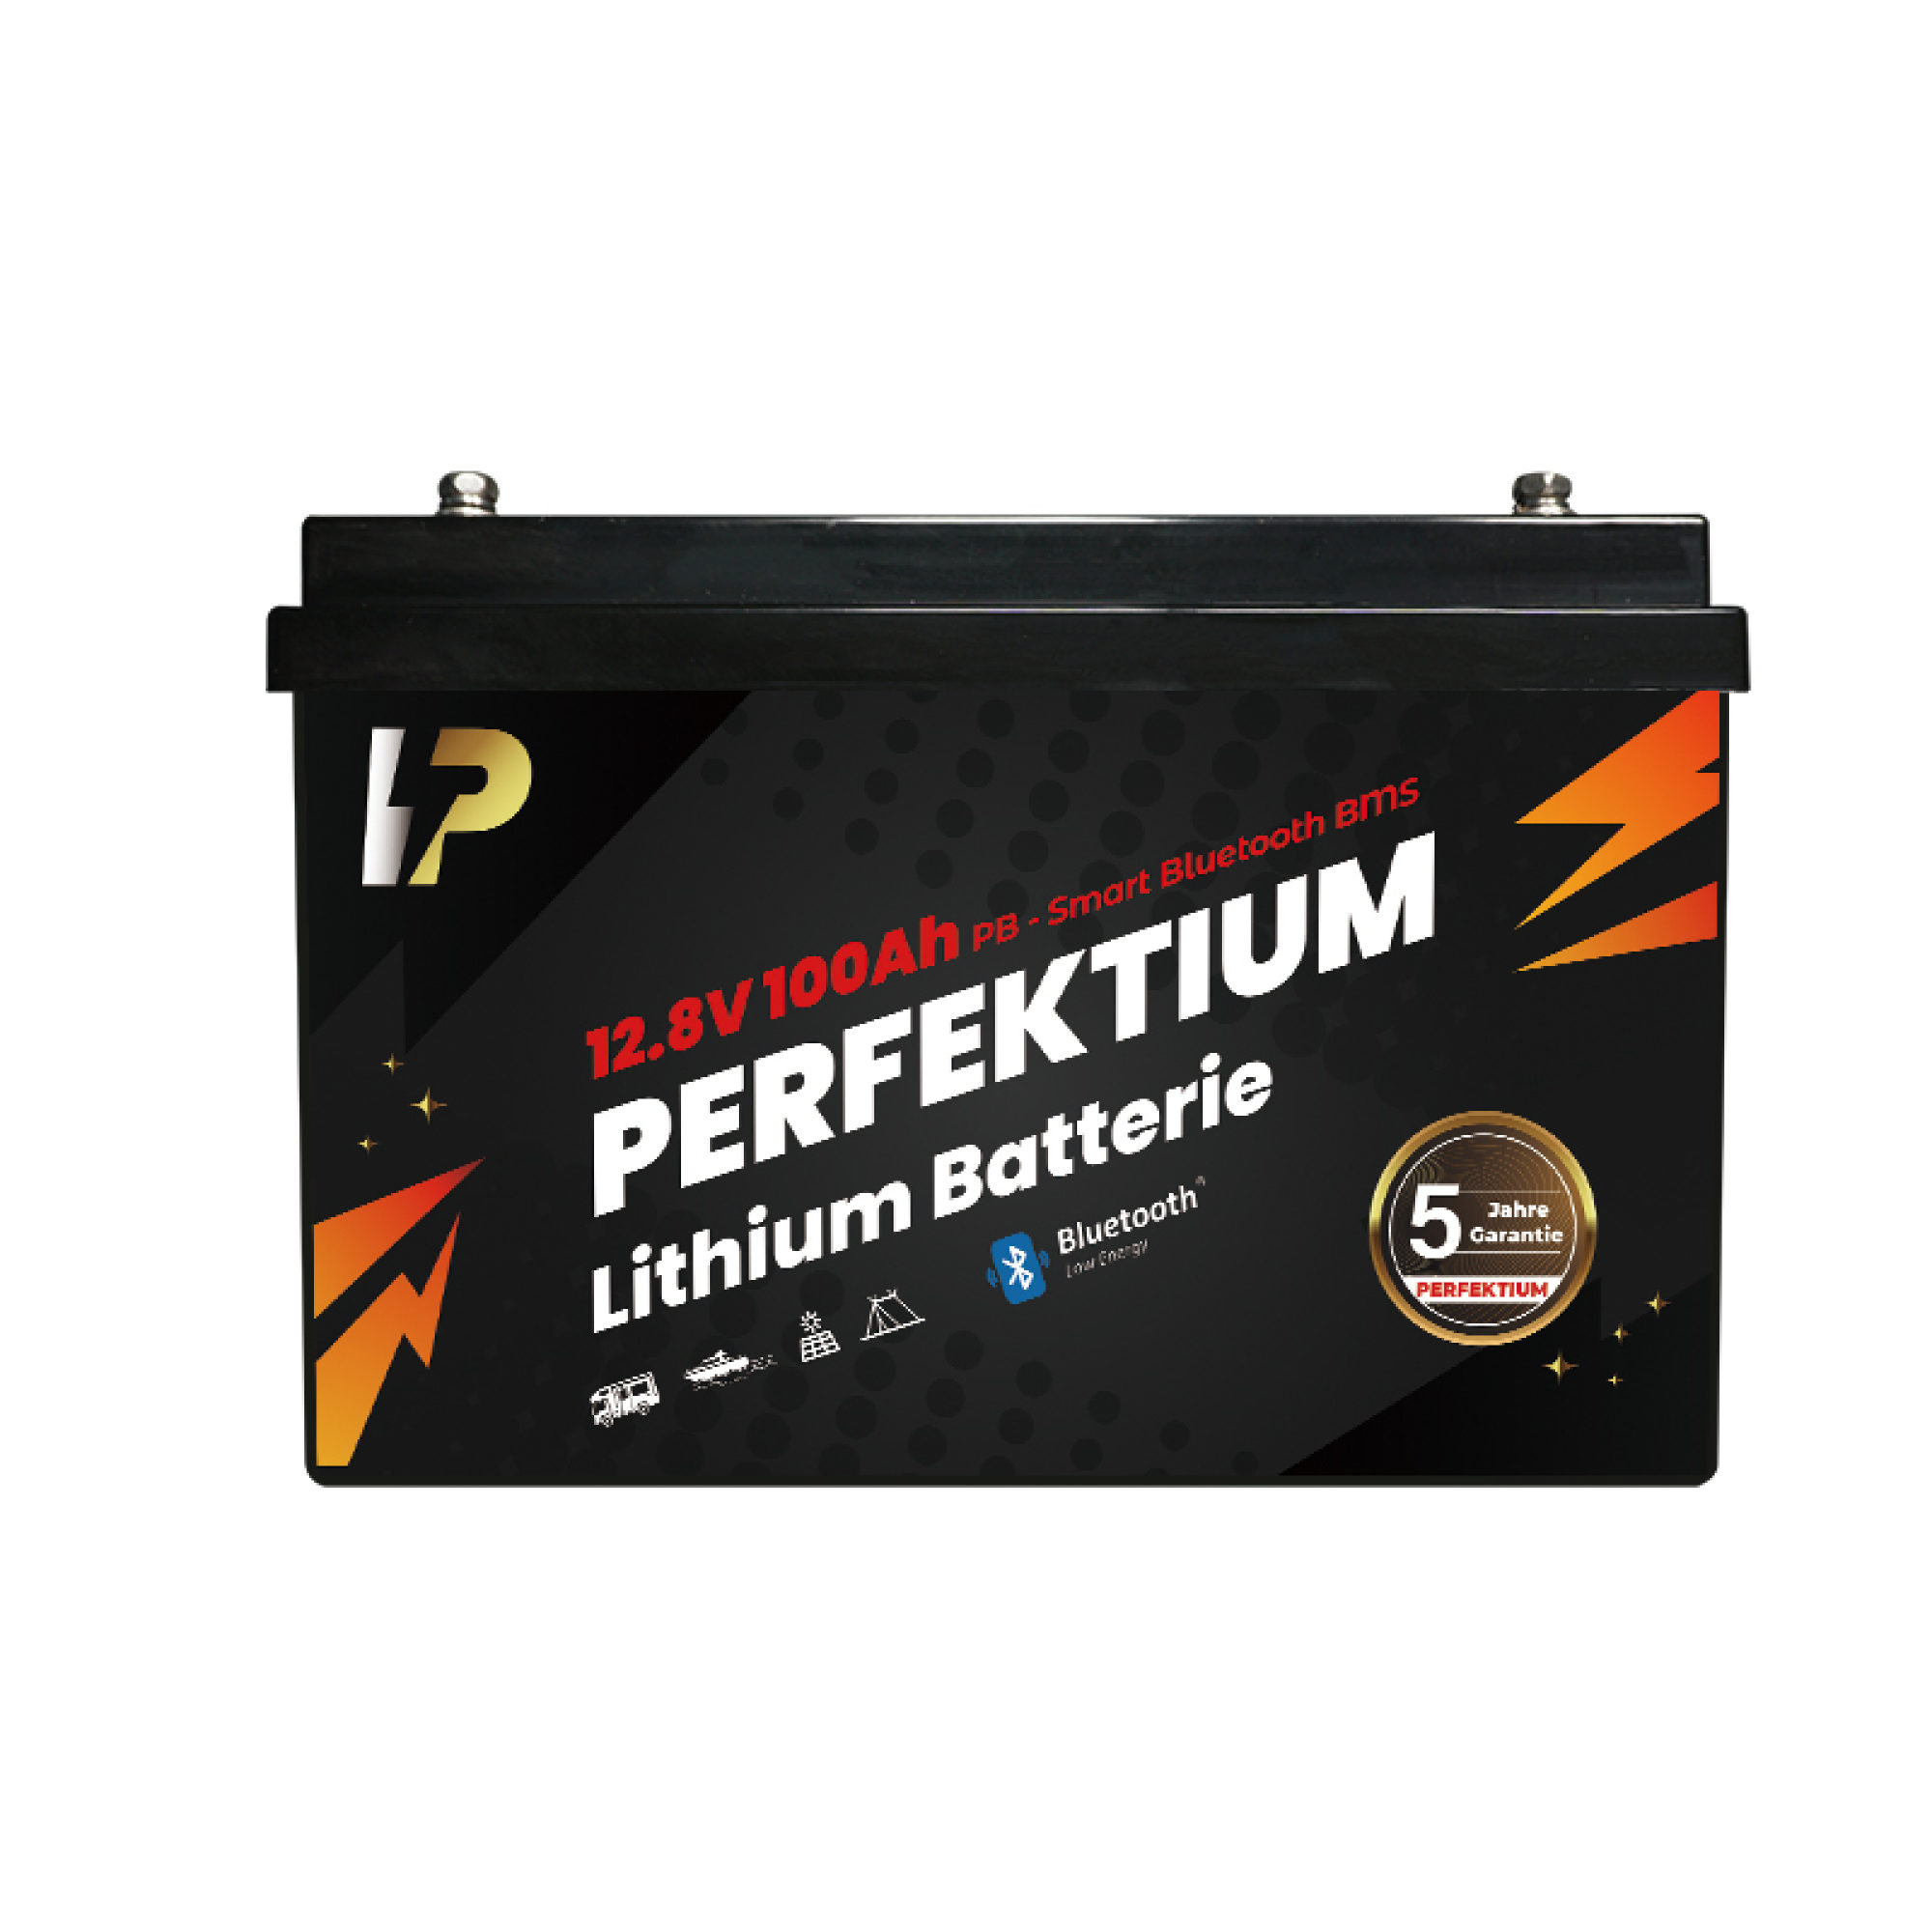 Perfektium LiFePO4 PB-12.8V 100Ah – Lithium Batterie Smart BMS mit Bluetooth – 6 Jahre Garantie